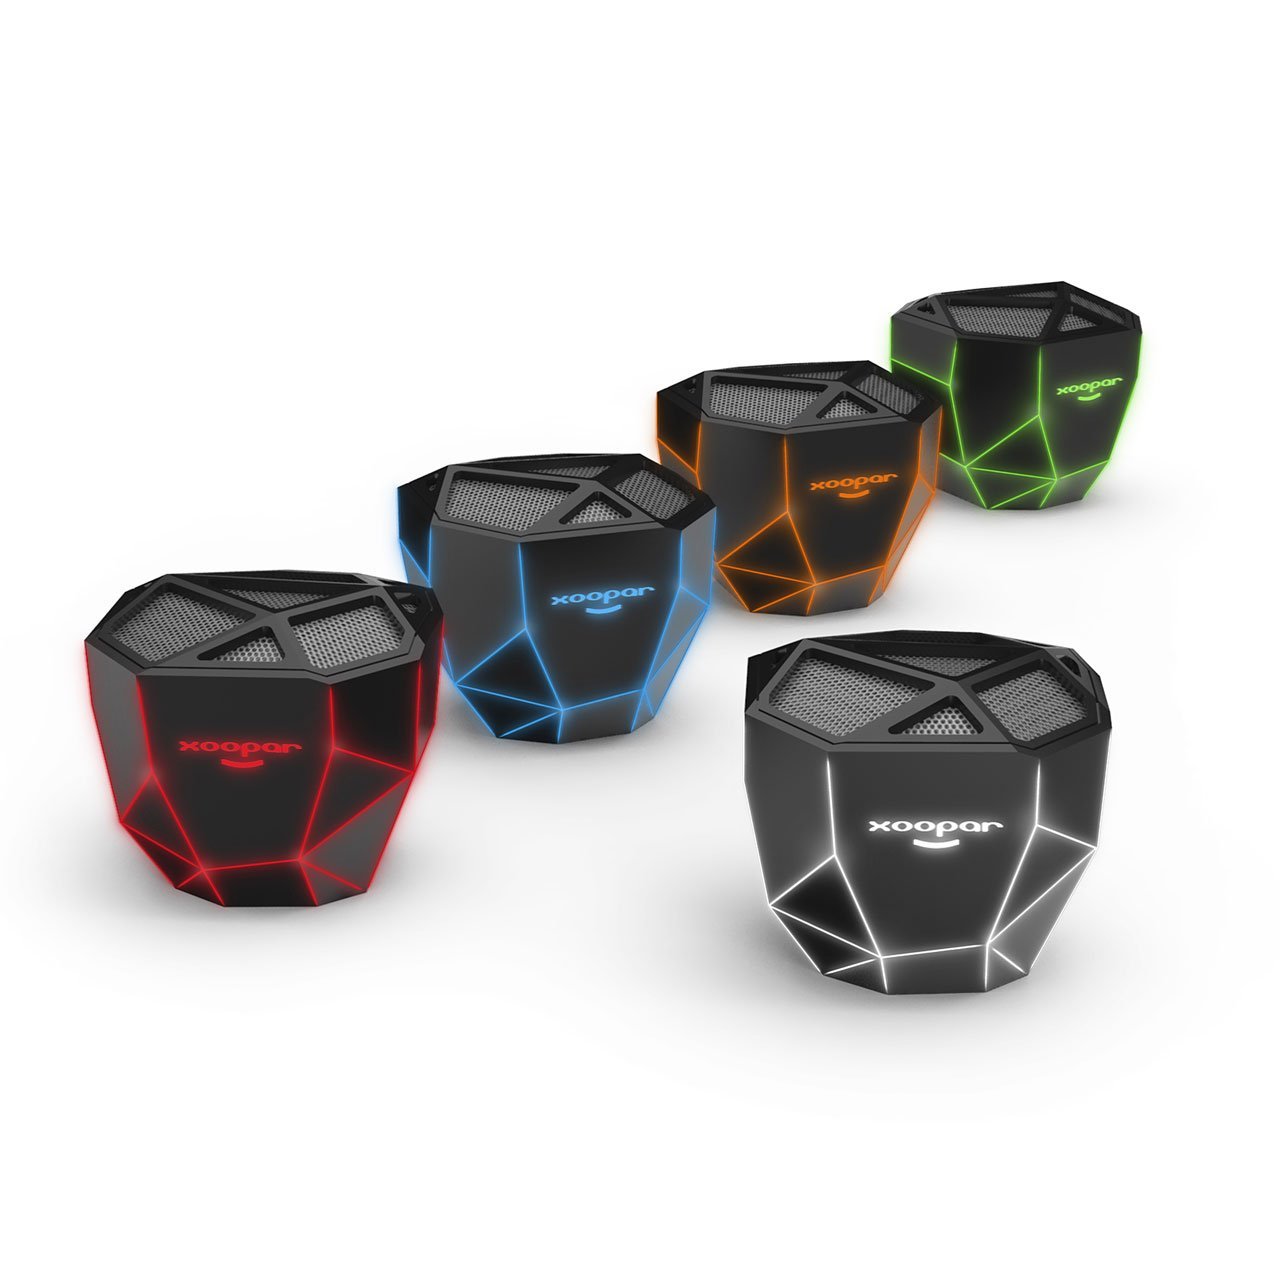 Branded Bluetooth Speaker